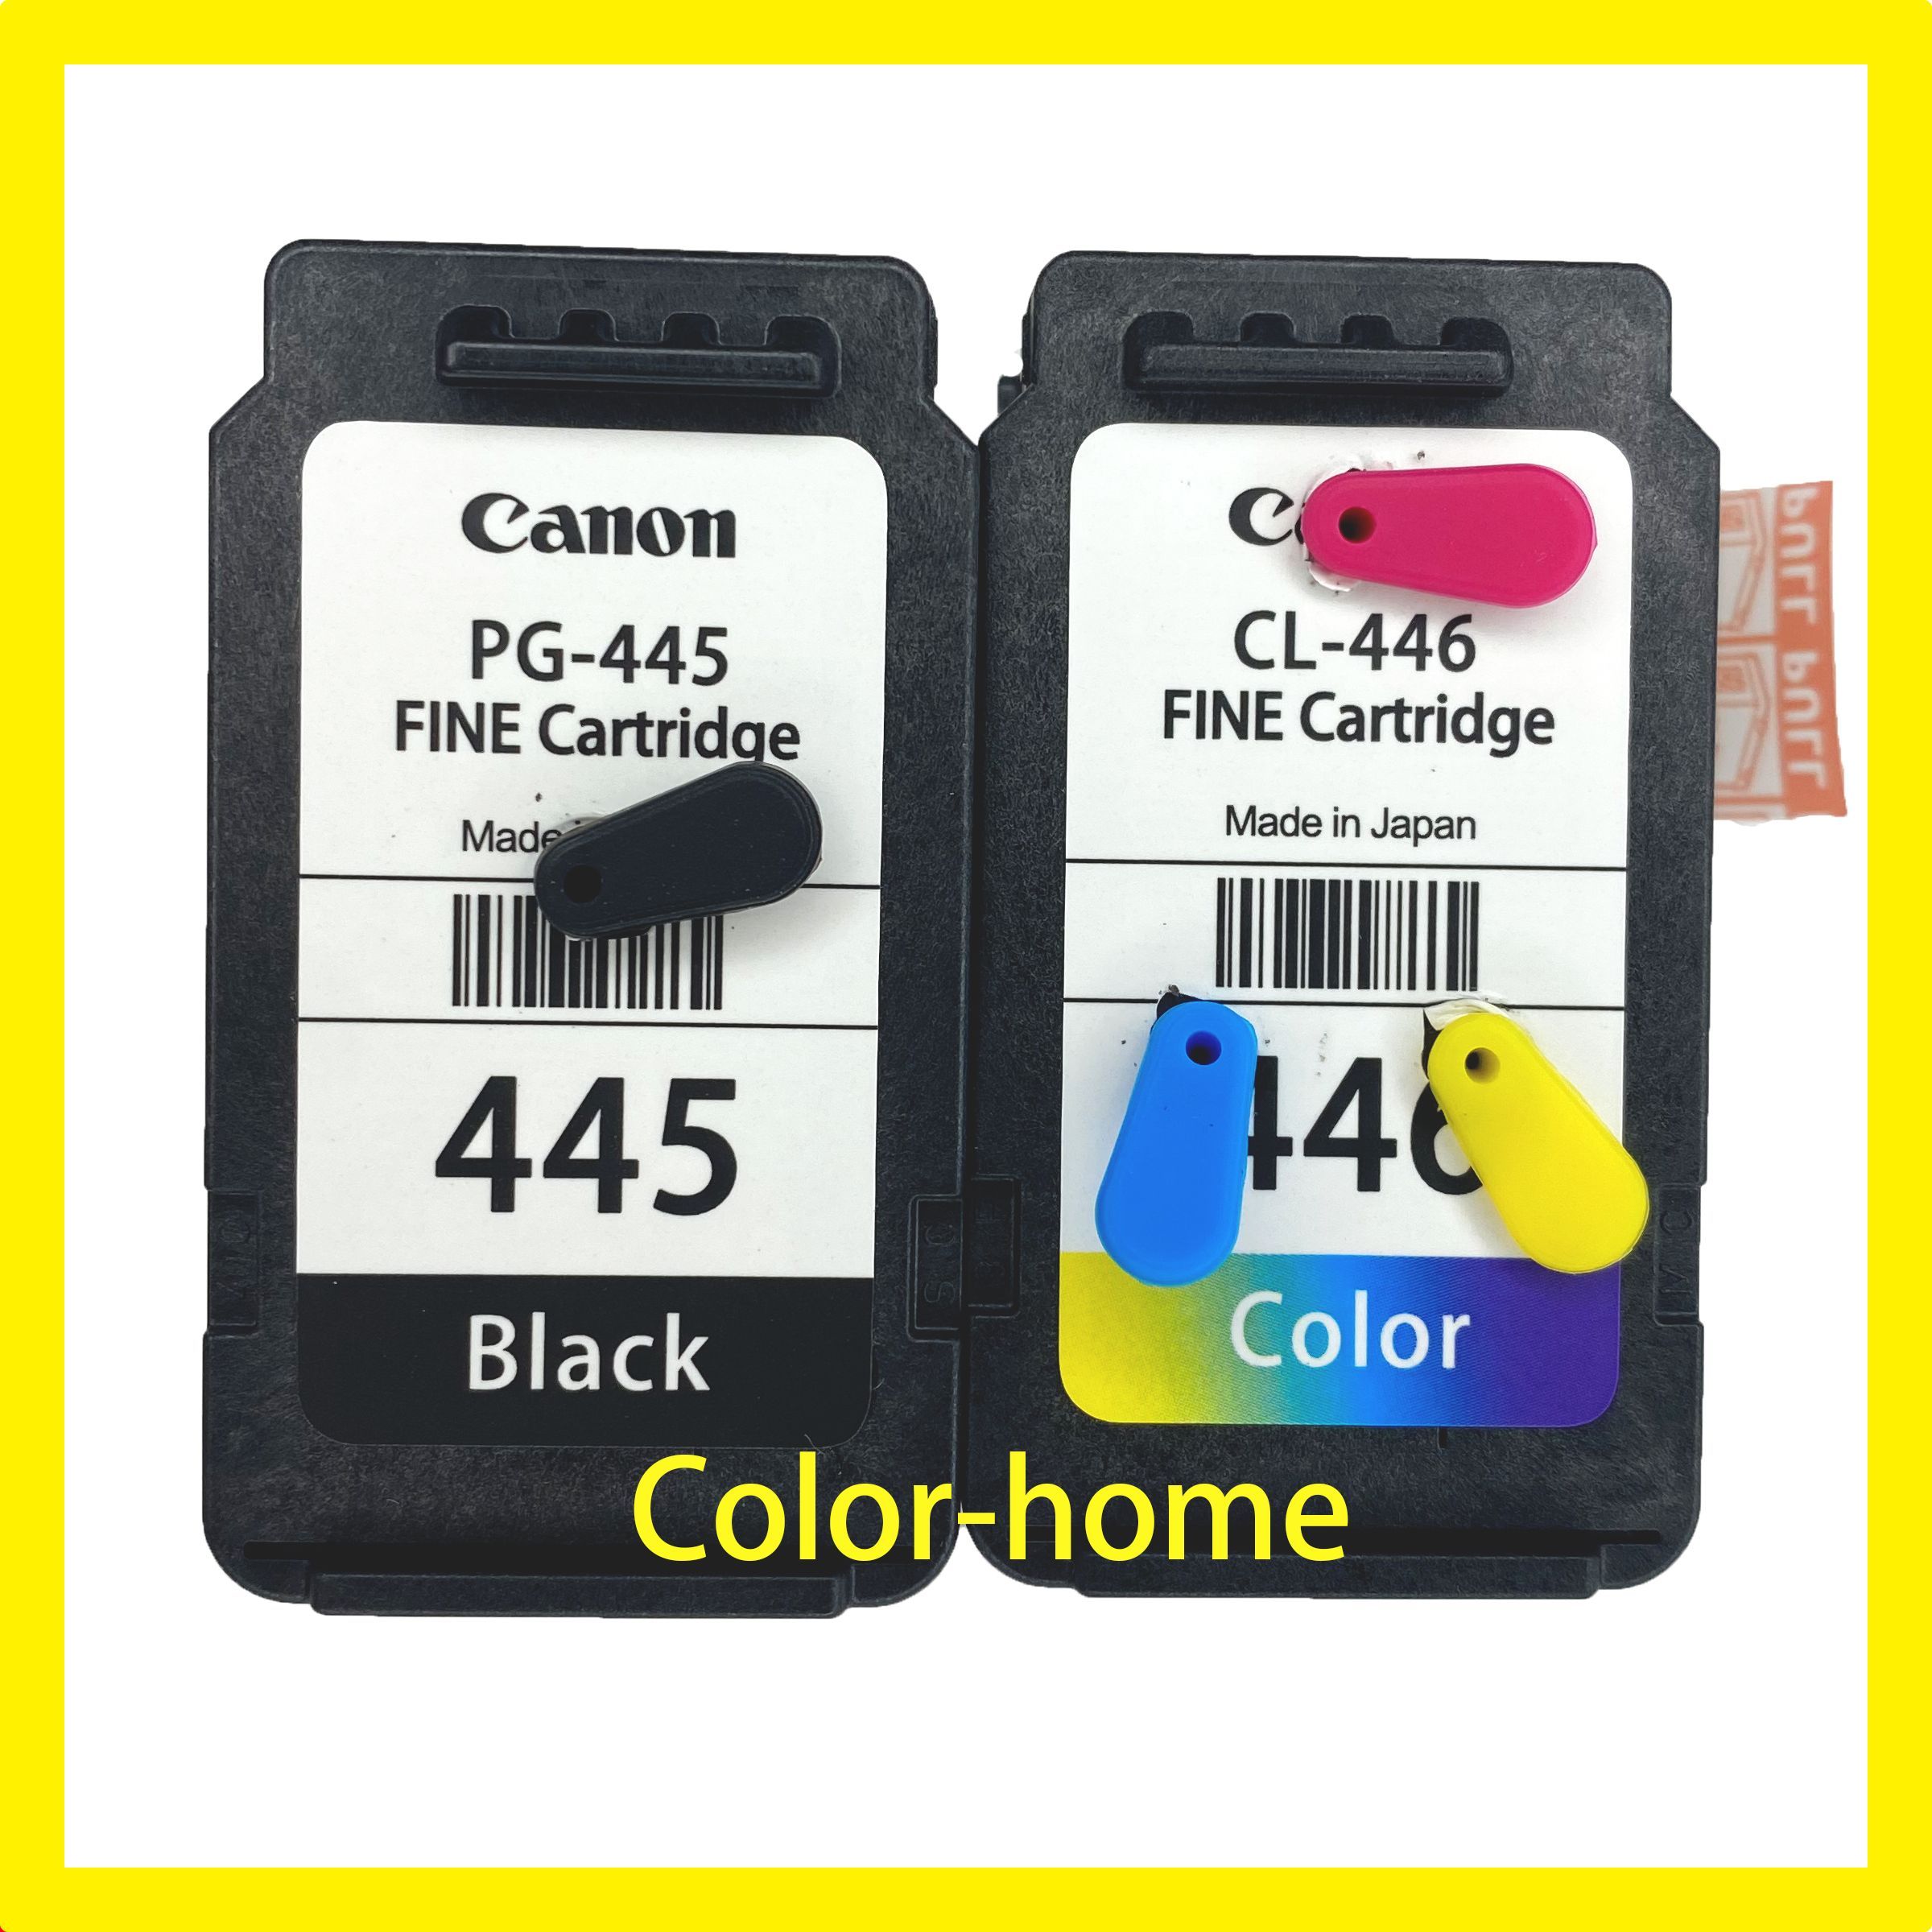 Картридж 445 446 canon купить. Canon PIXMA mg2540s. Canon PIXMA mg2440. PG-445. Есть ли чип на картриджах 445 и 446.